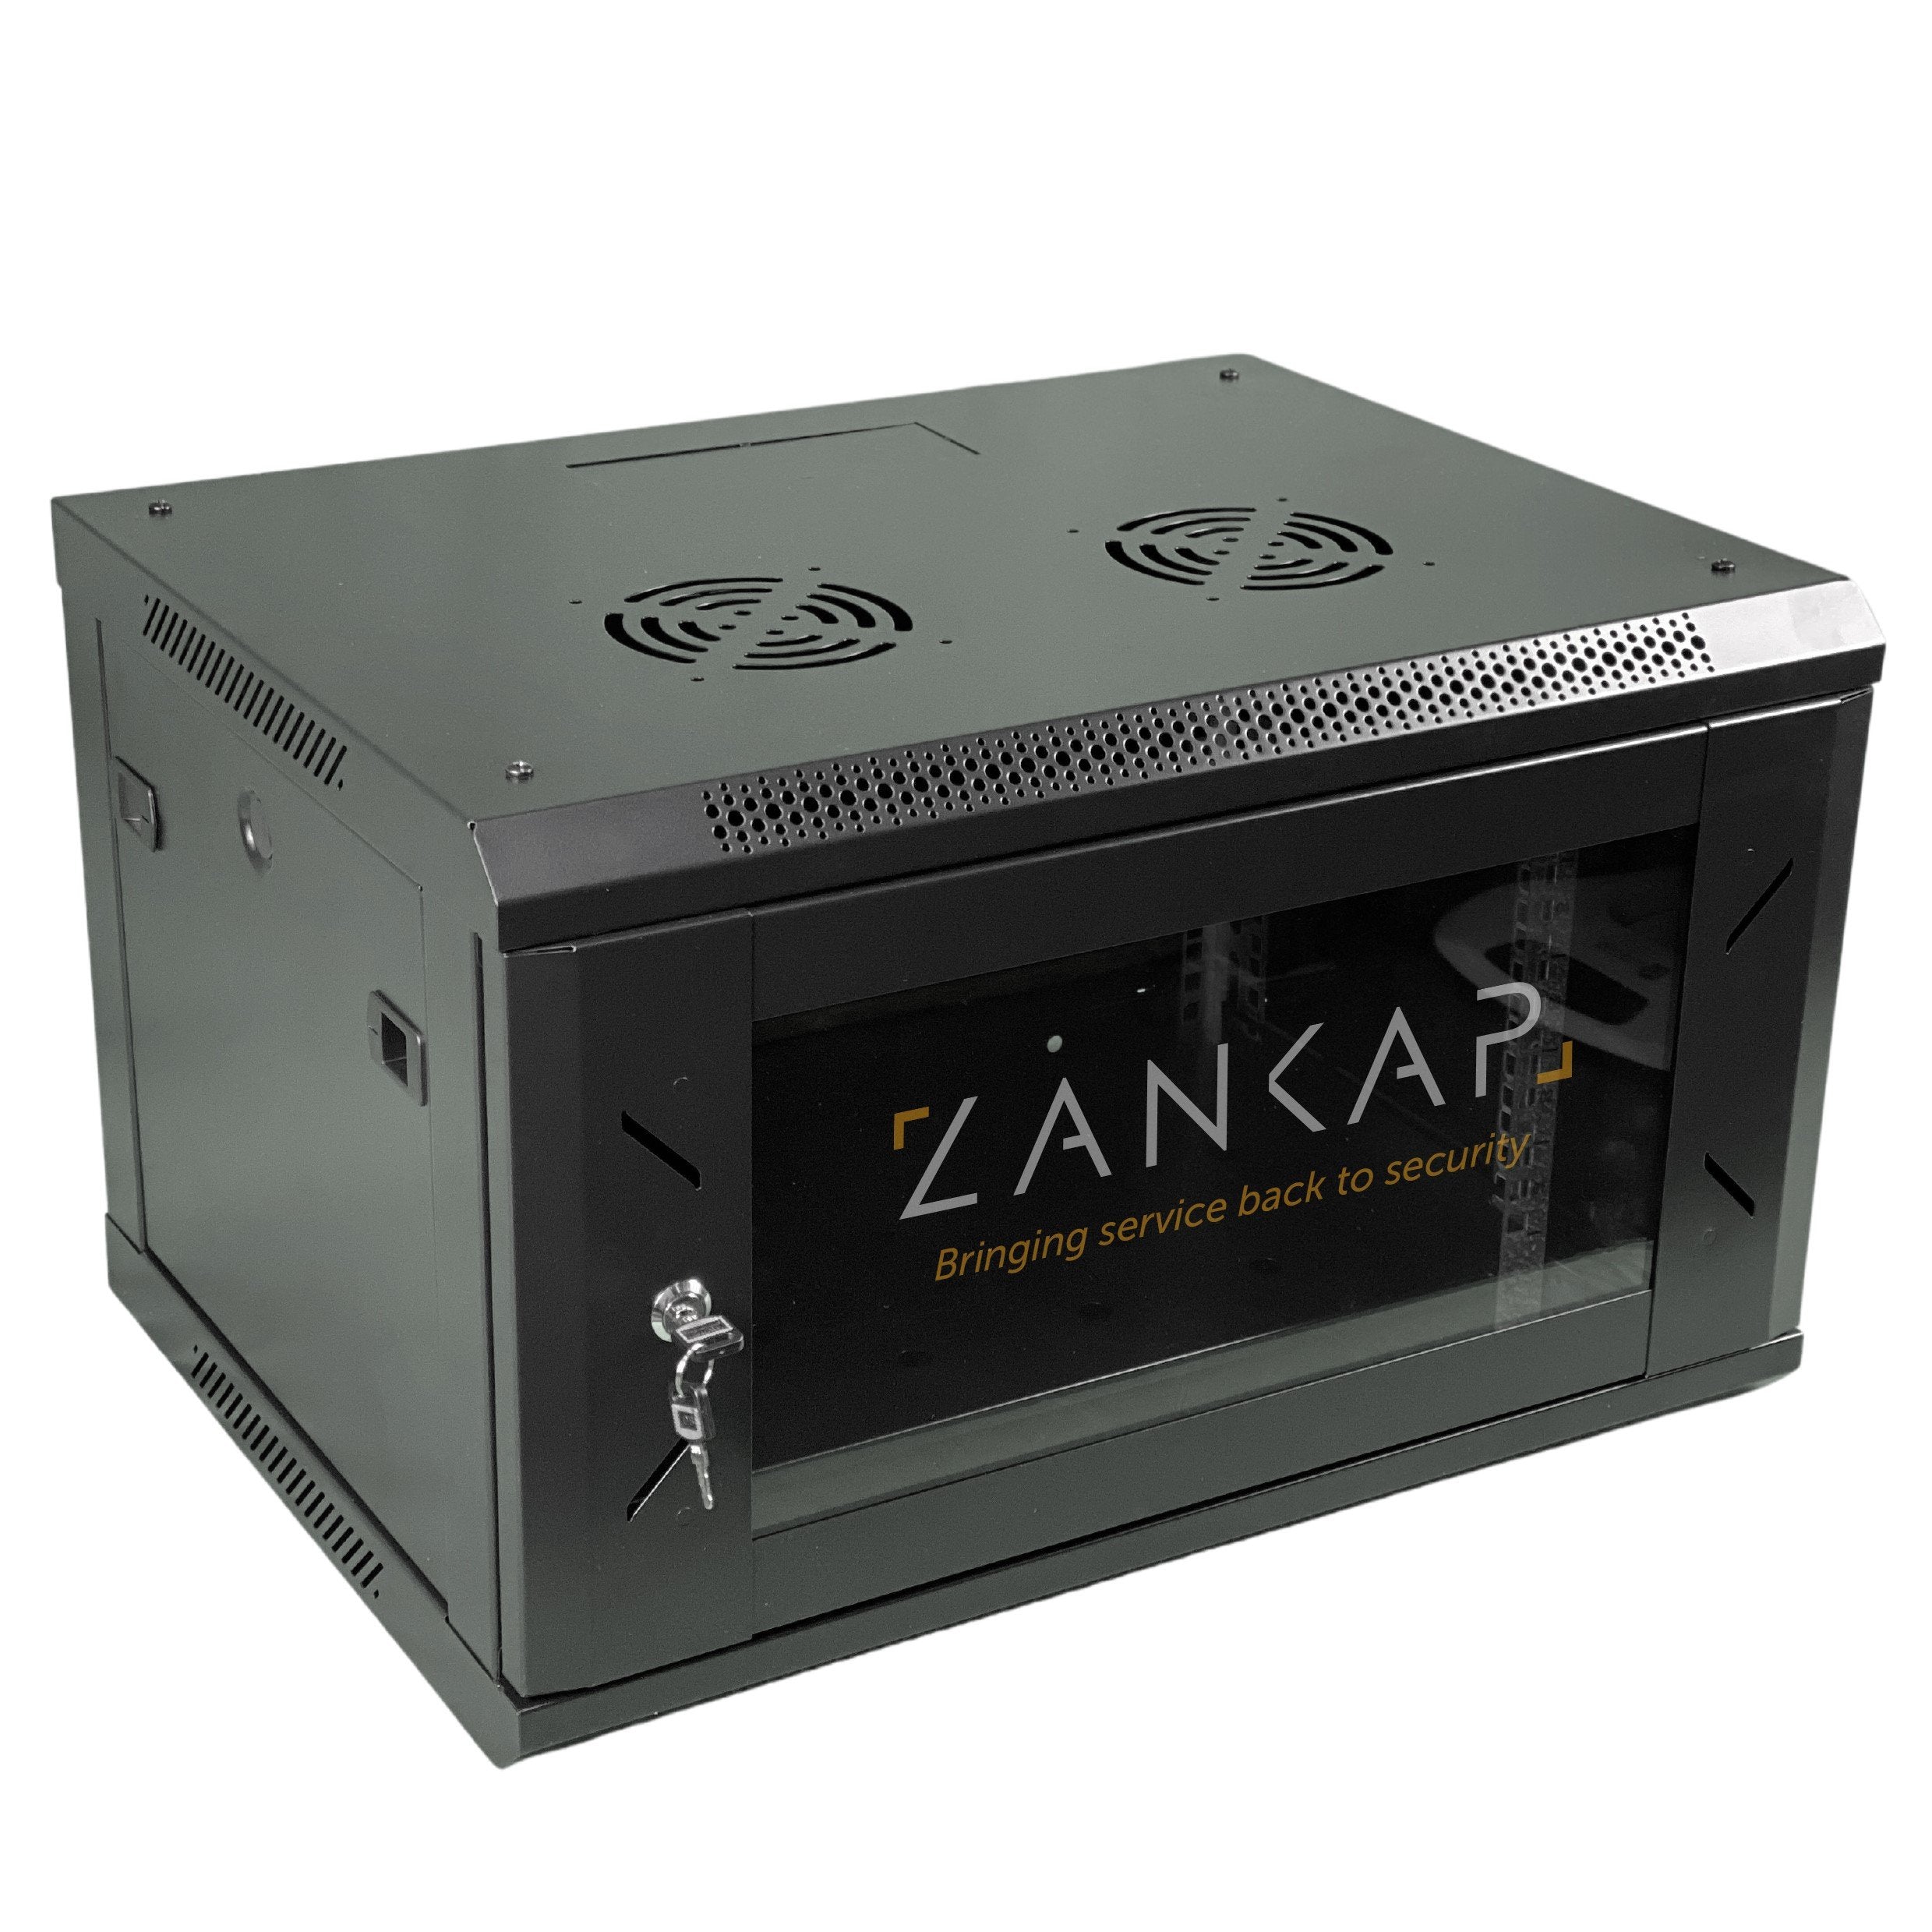 Zankap 6RU 450mm Deep Wall Mount Cabinet With 1 x Fixed Shelf, 10 x Cage Nuts, Lockable Glass Front Door, Rapid Build Flatpack